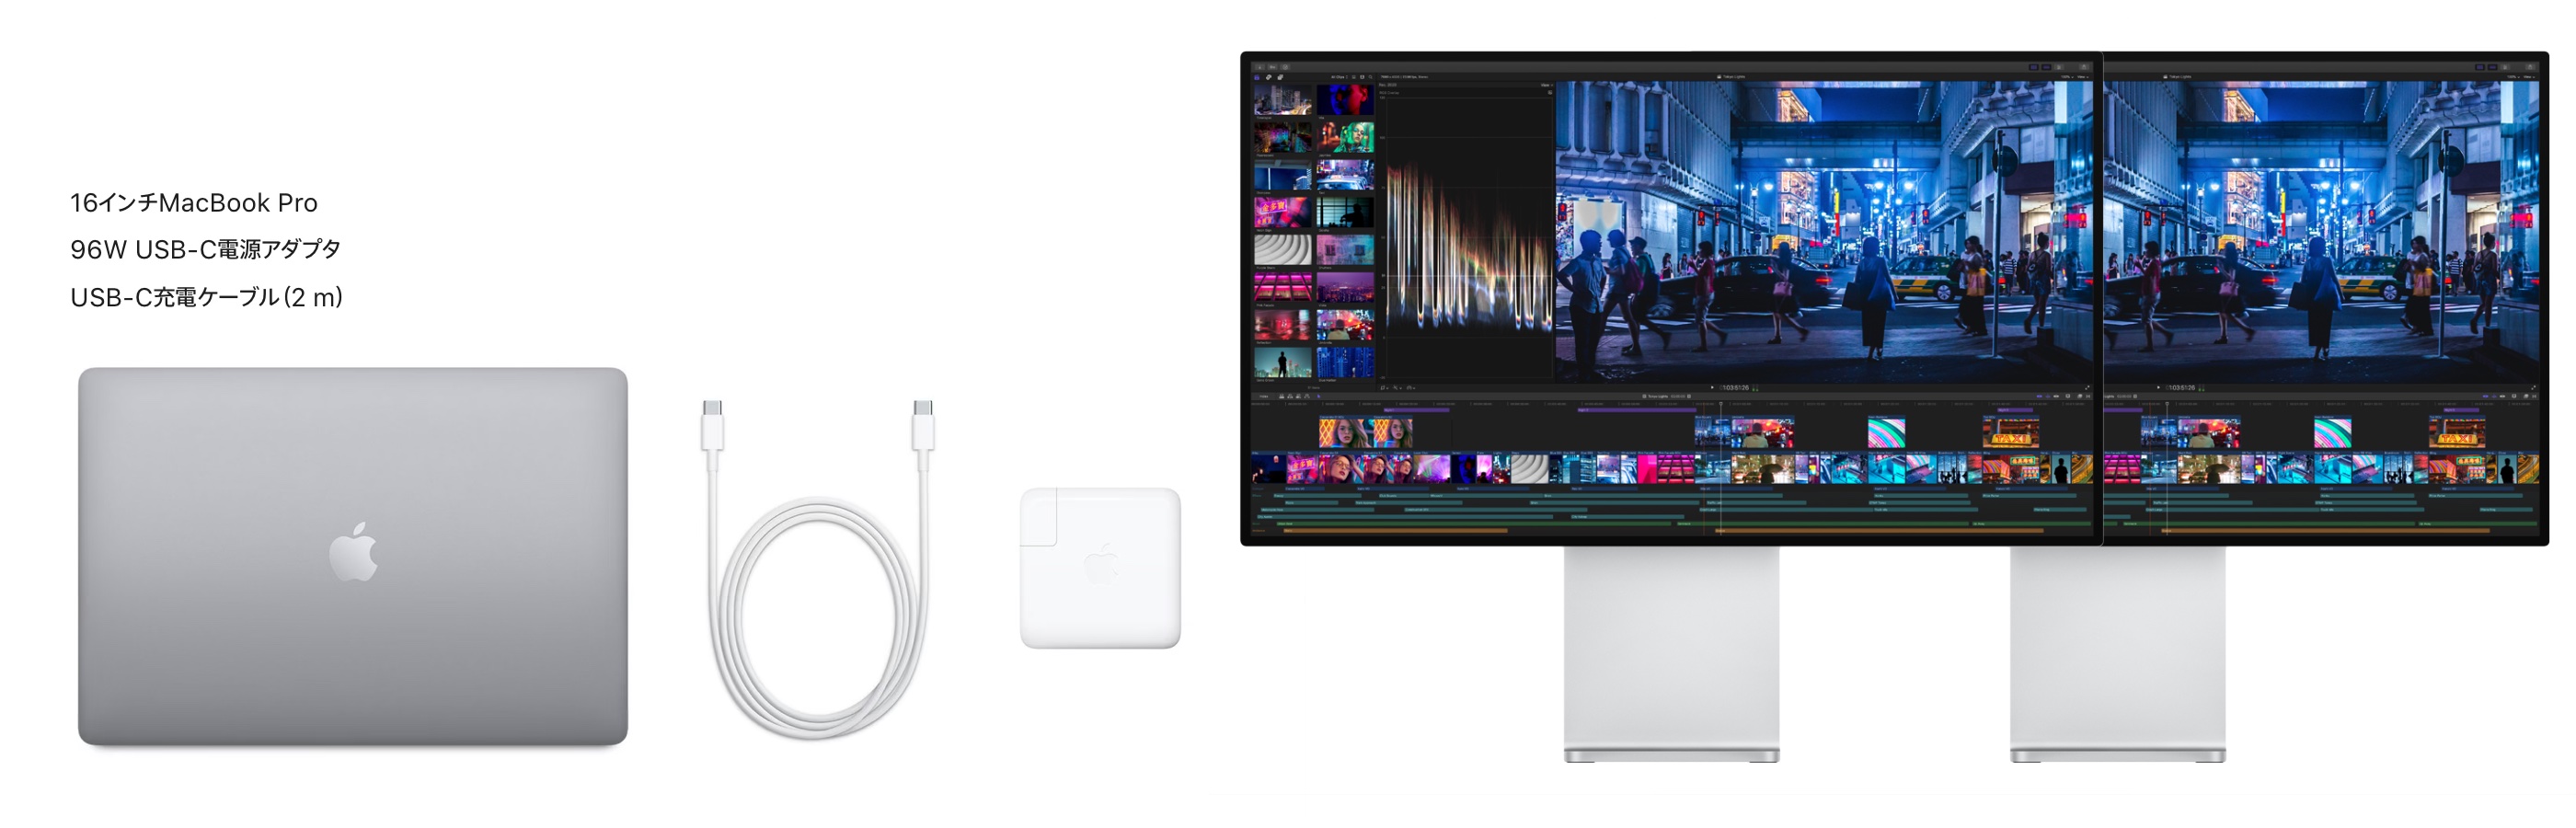 MacBook Pro (16-inch, 2019)の同梱品